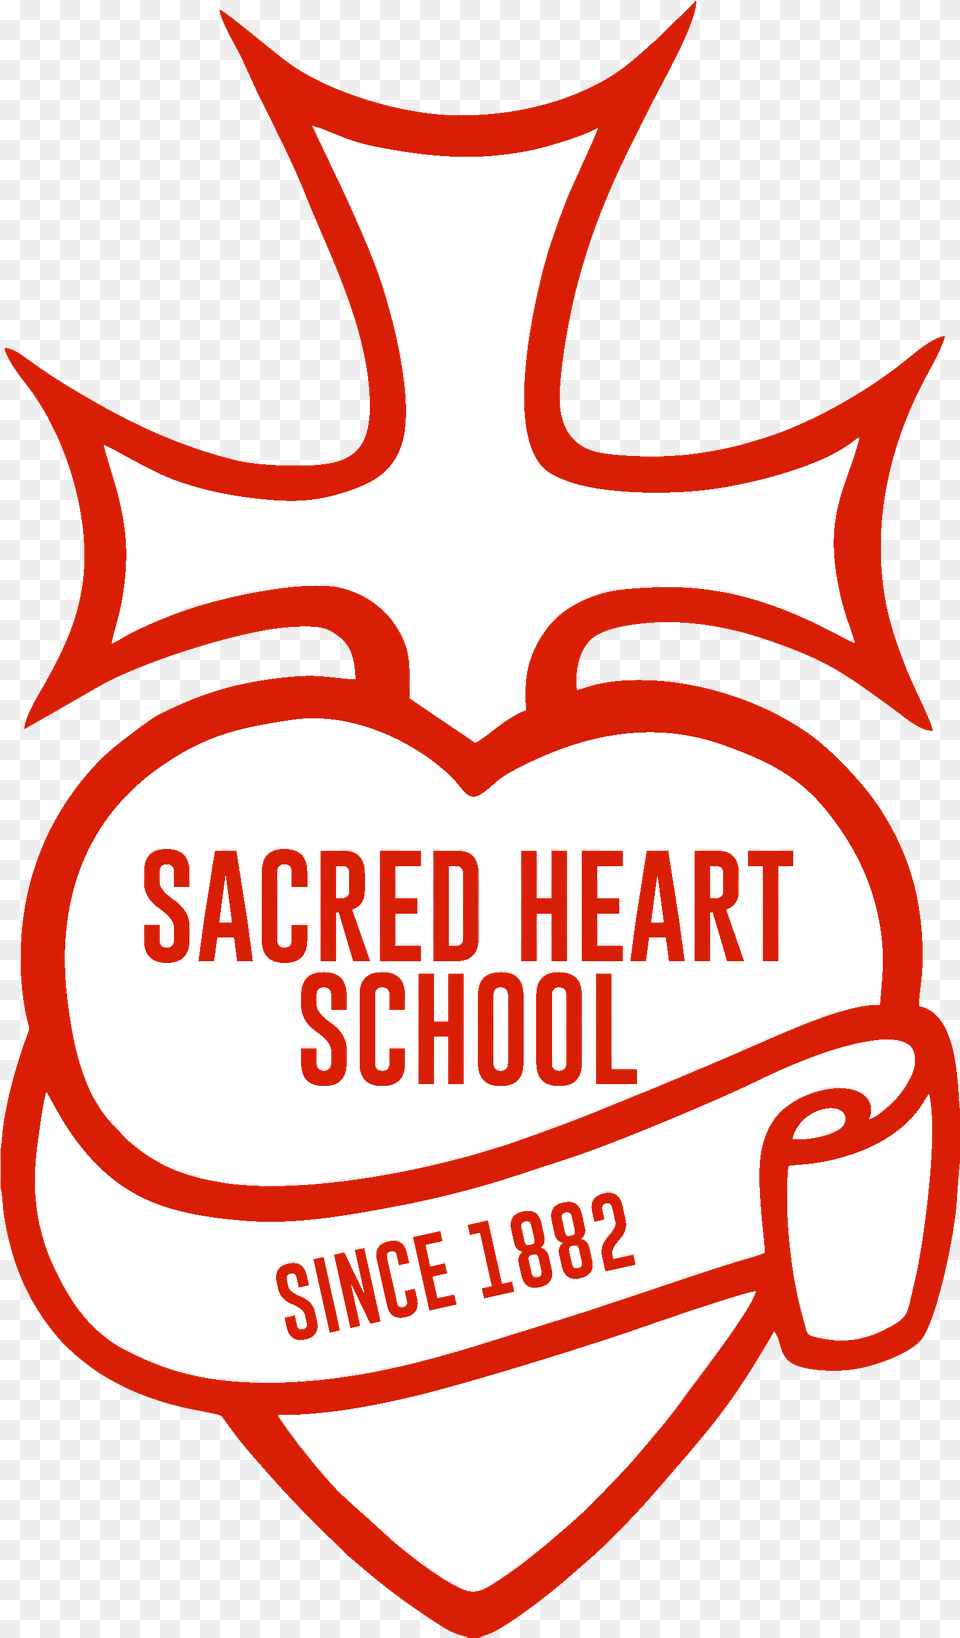 Mascot U0026 Logos Sacred Heart School Est 1882sacred Heart Sacred Heart School, Logo, Dynamite, Weapon, Symbol Png Image